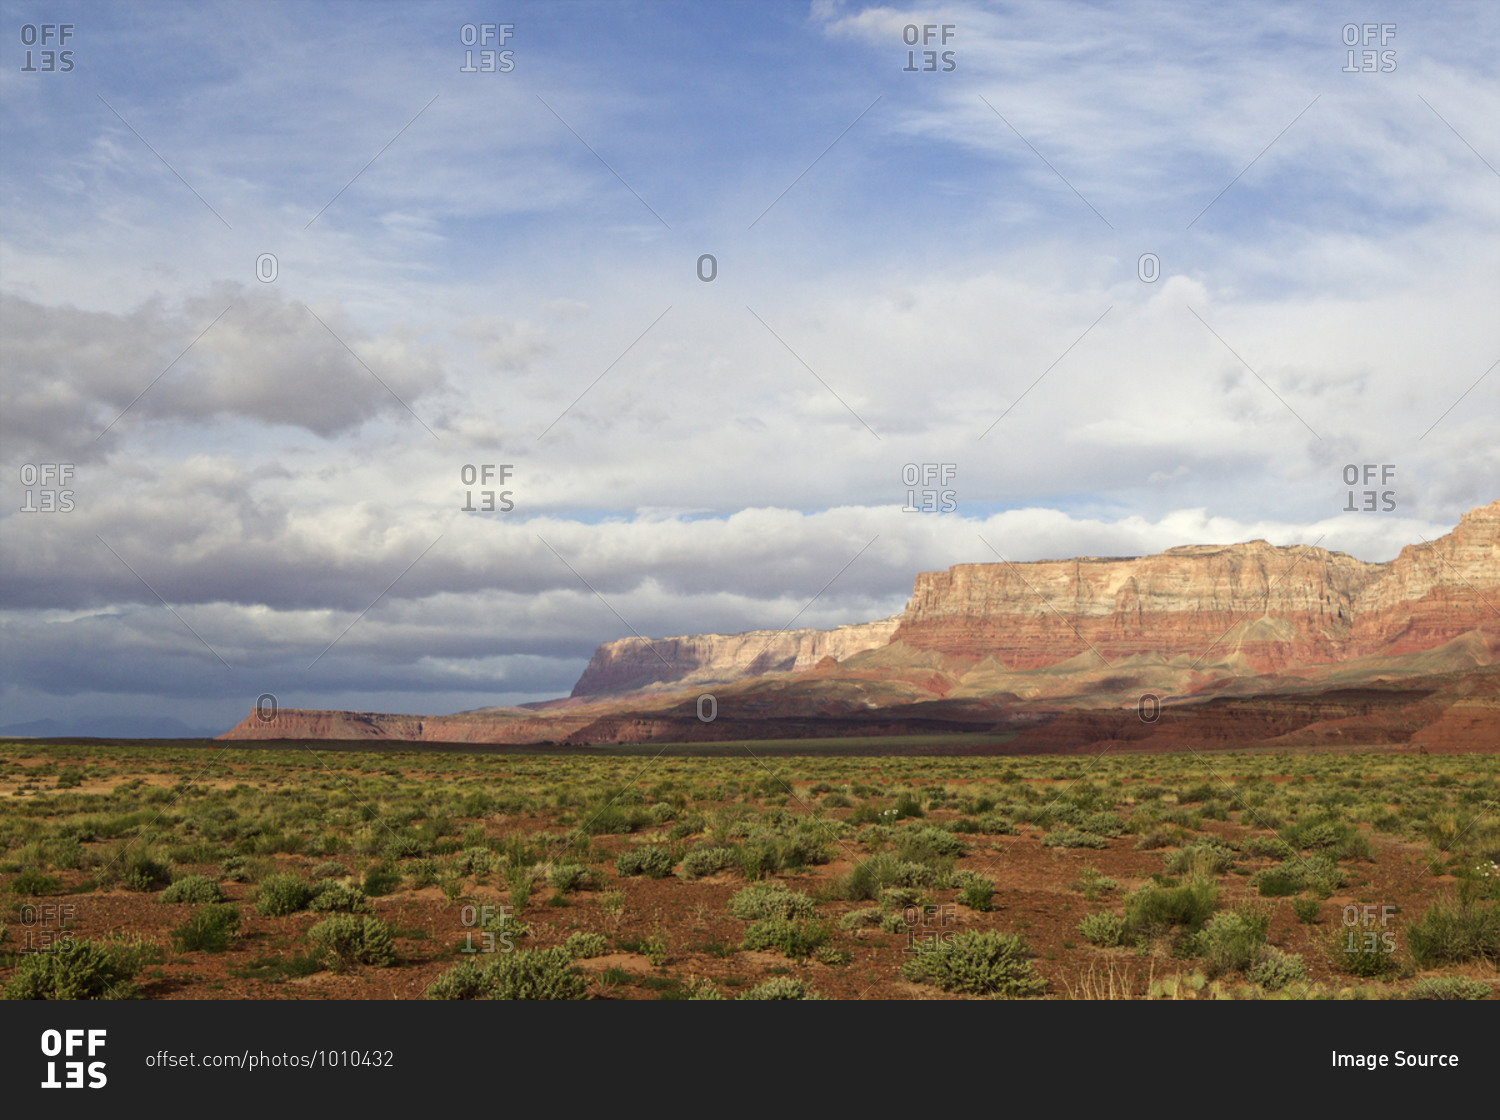 Arid landscape of the Grand Canyon, Arizona, USA stock photo
- OFFSET